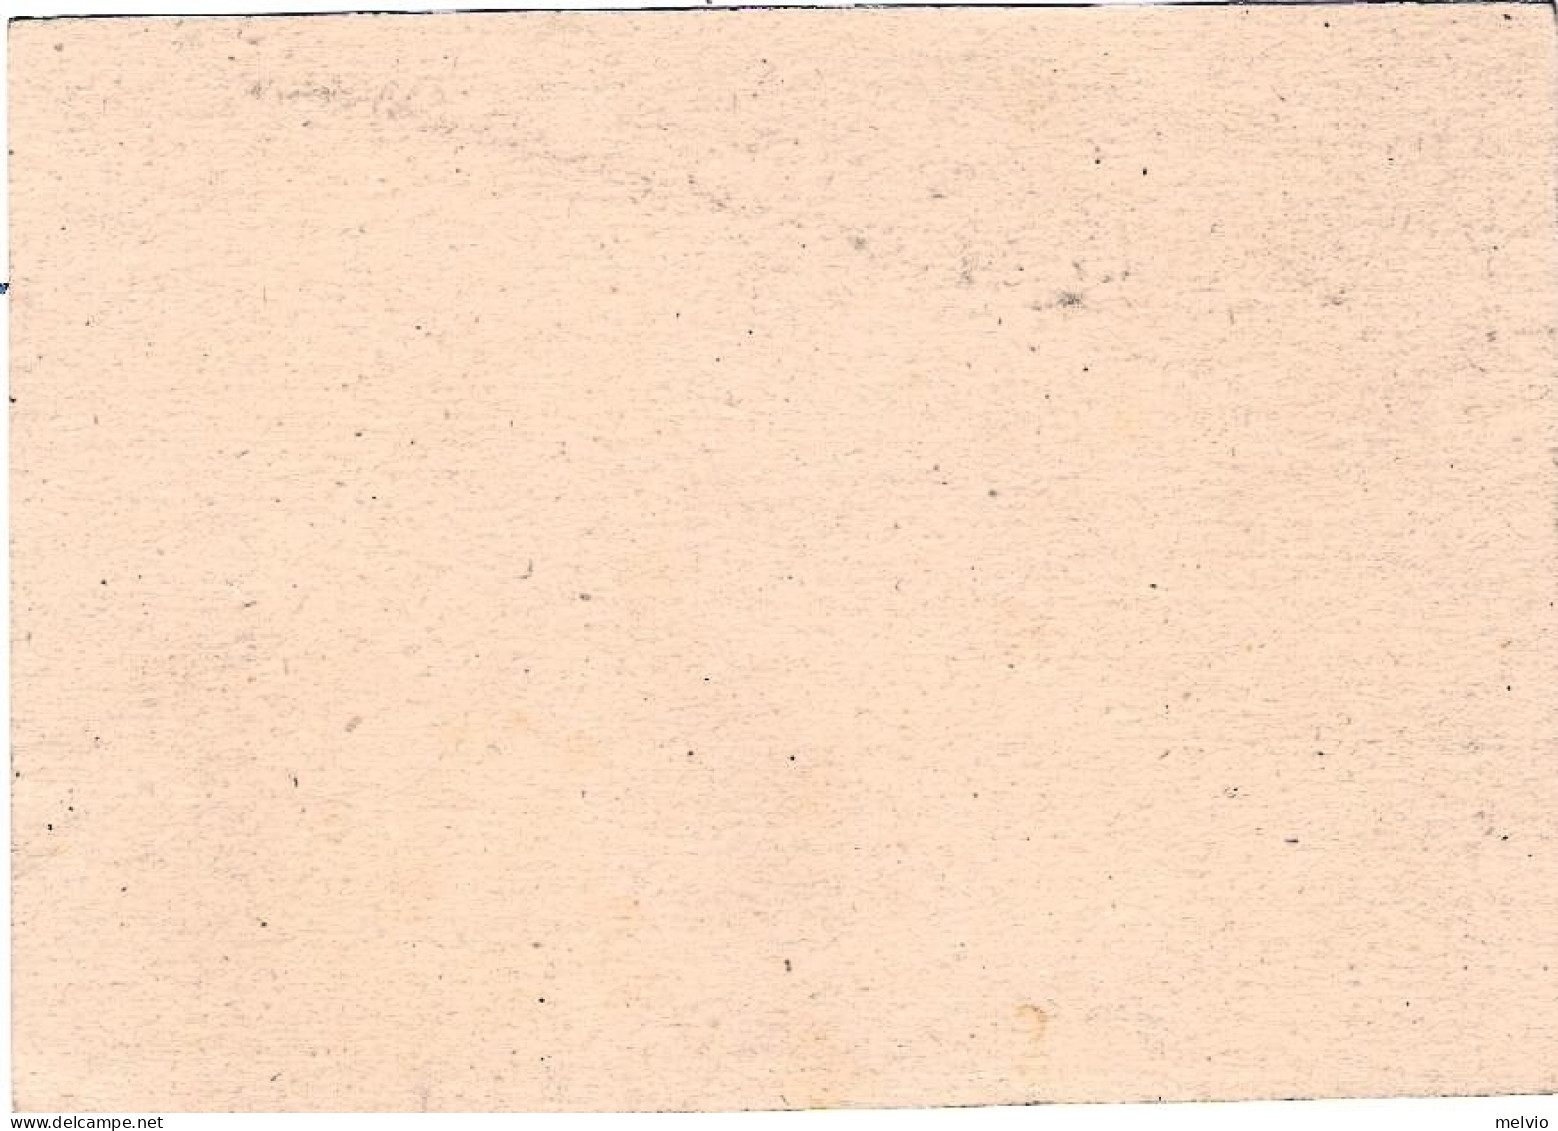 1942-cartolina Postale 15c. Nuova "Vinceremo" - Entiers Postaux